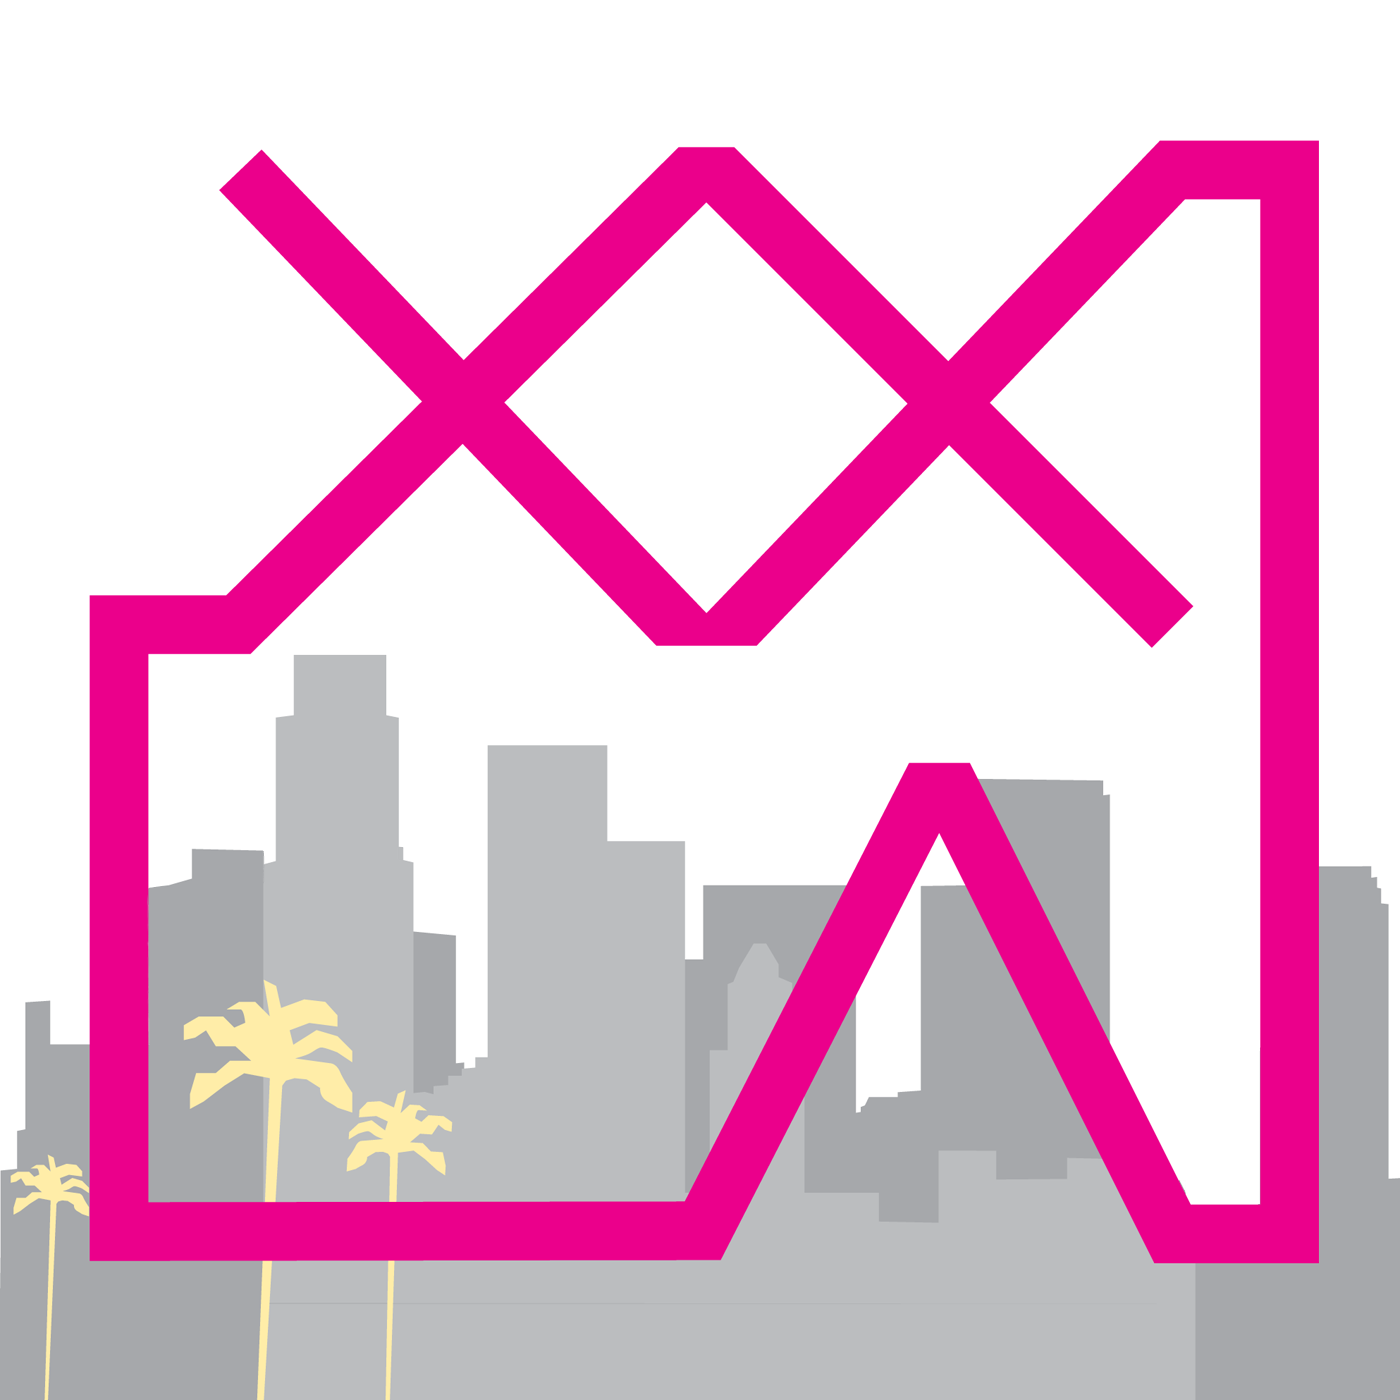 XX|LA Architects Podcast